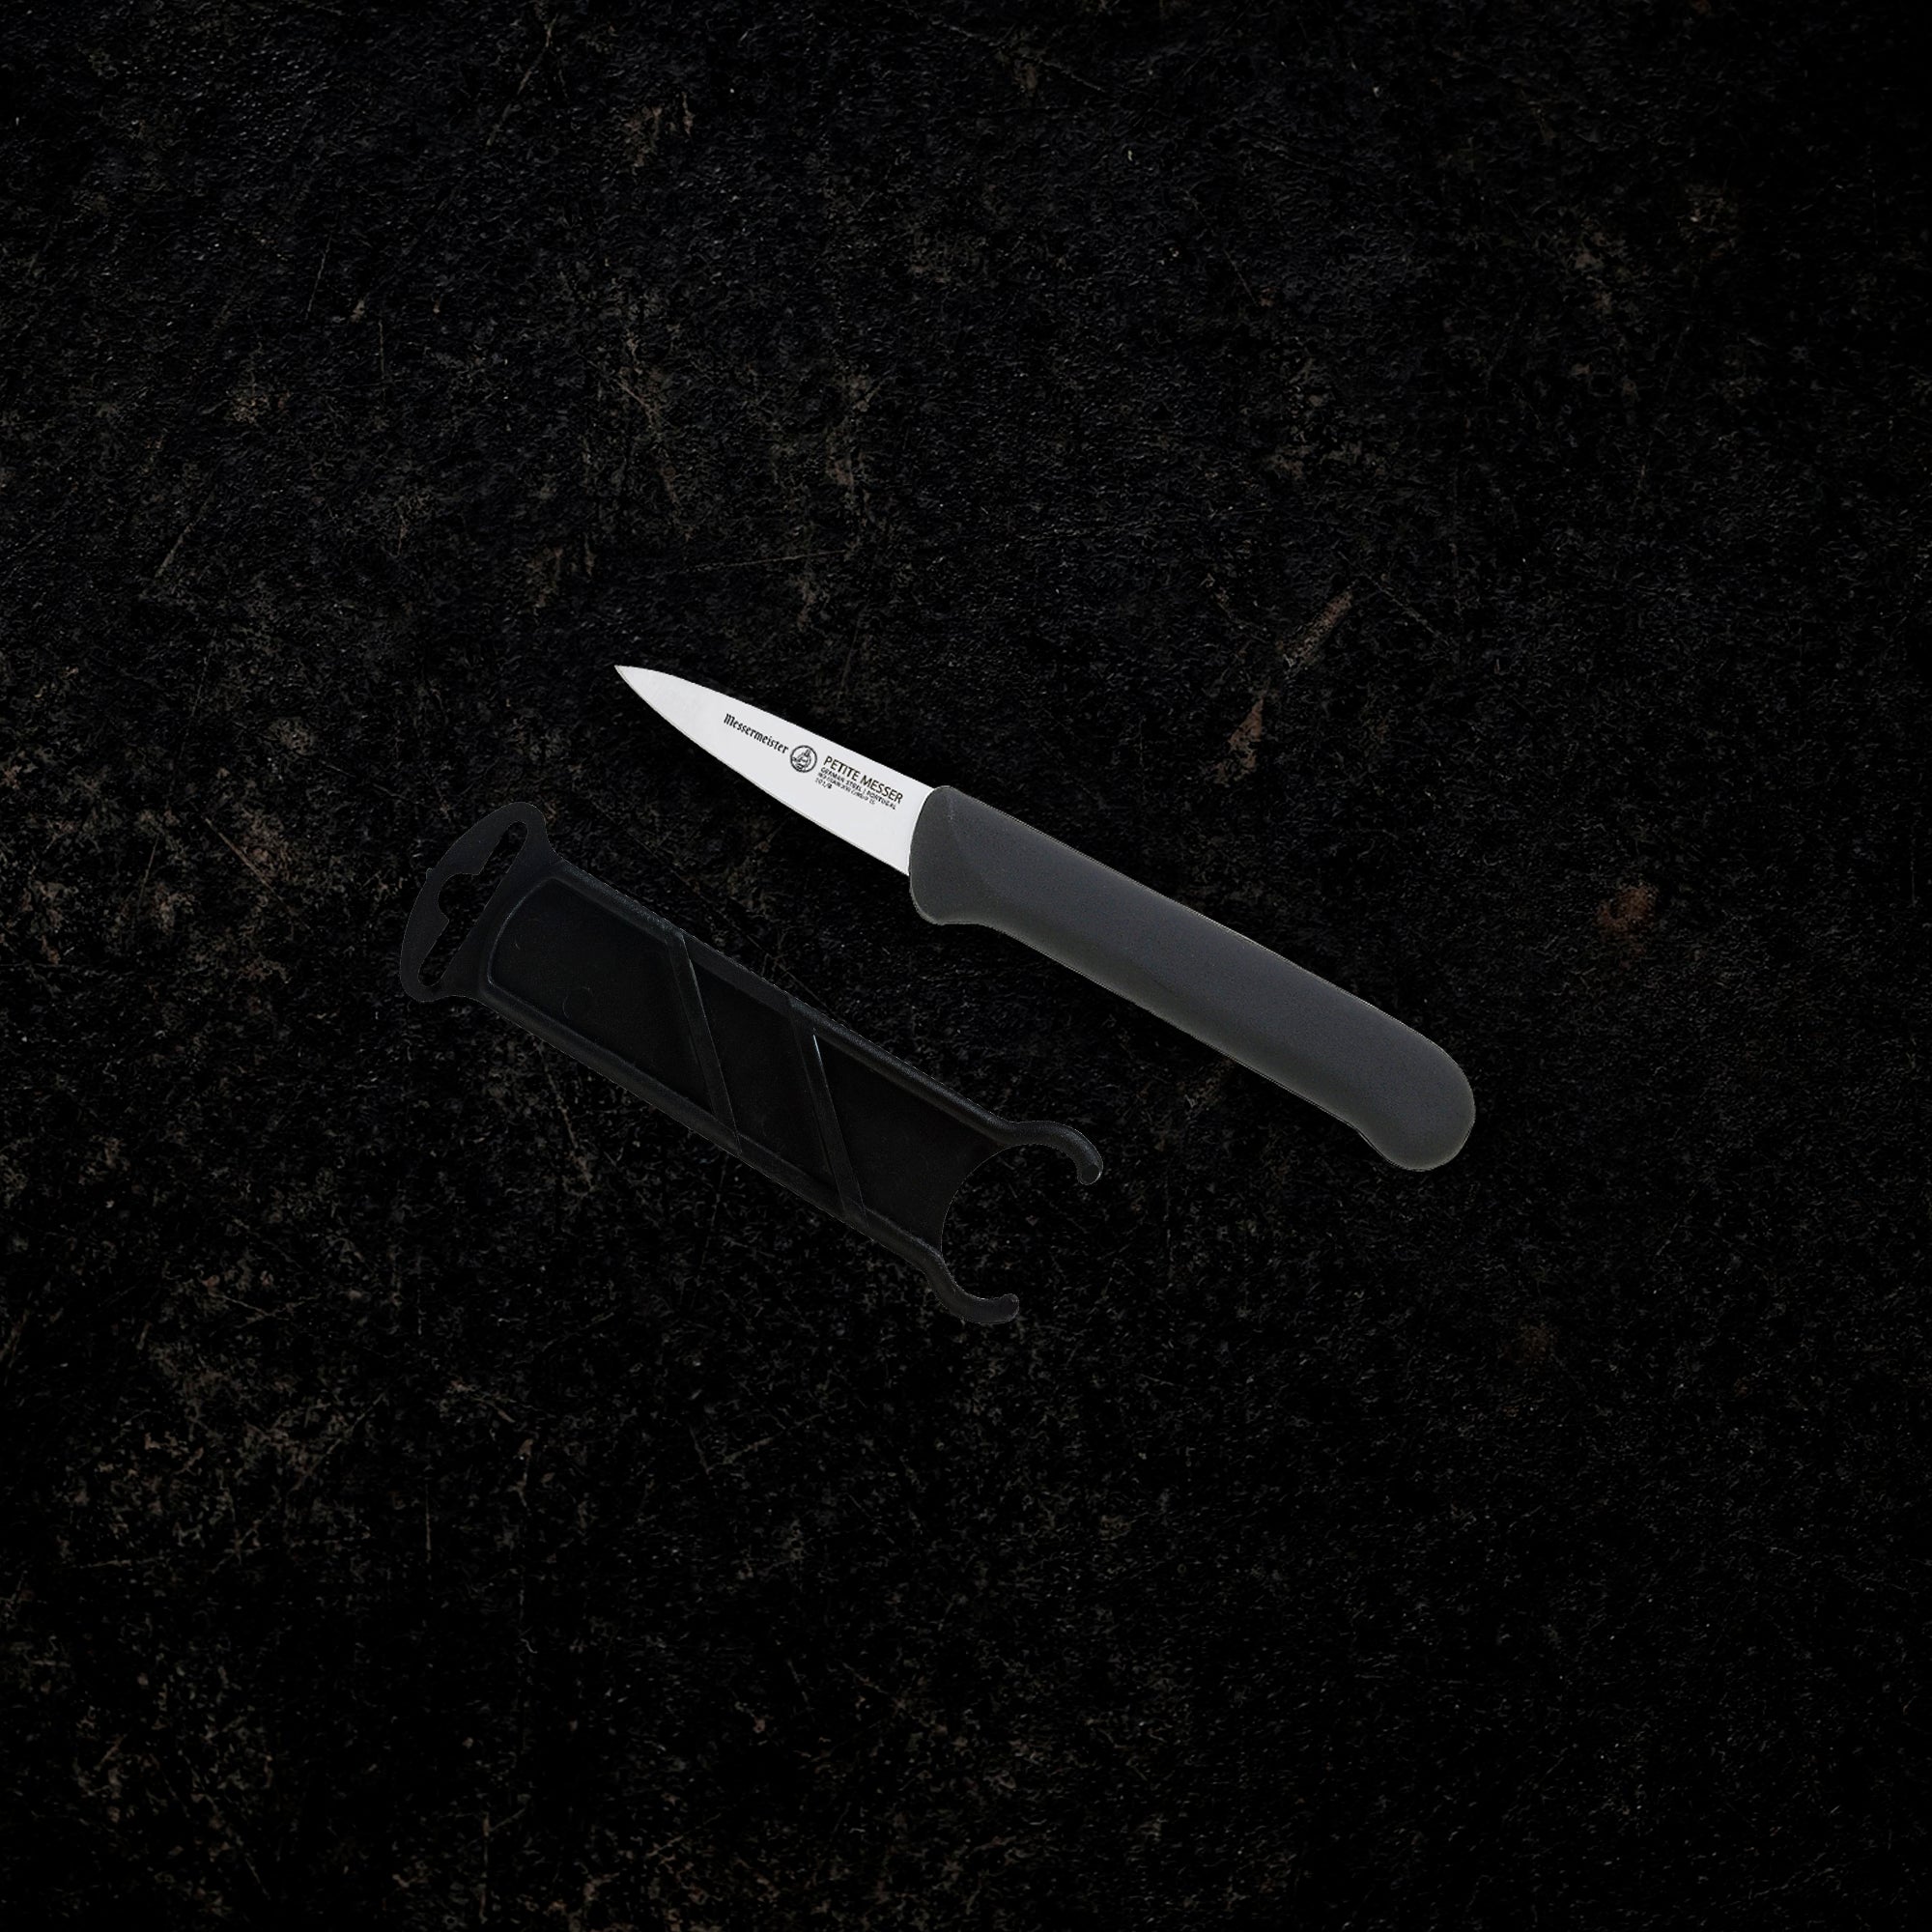 Messermeister Overland Leather Chef's Knife Sheath